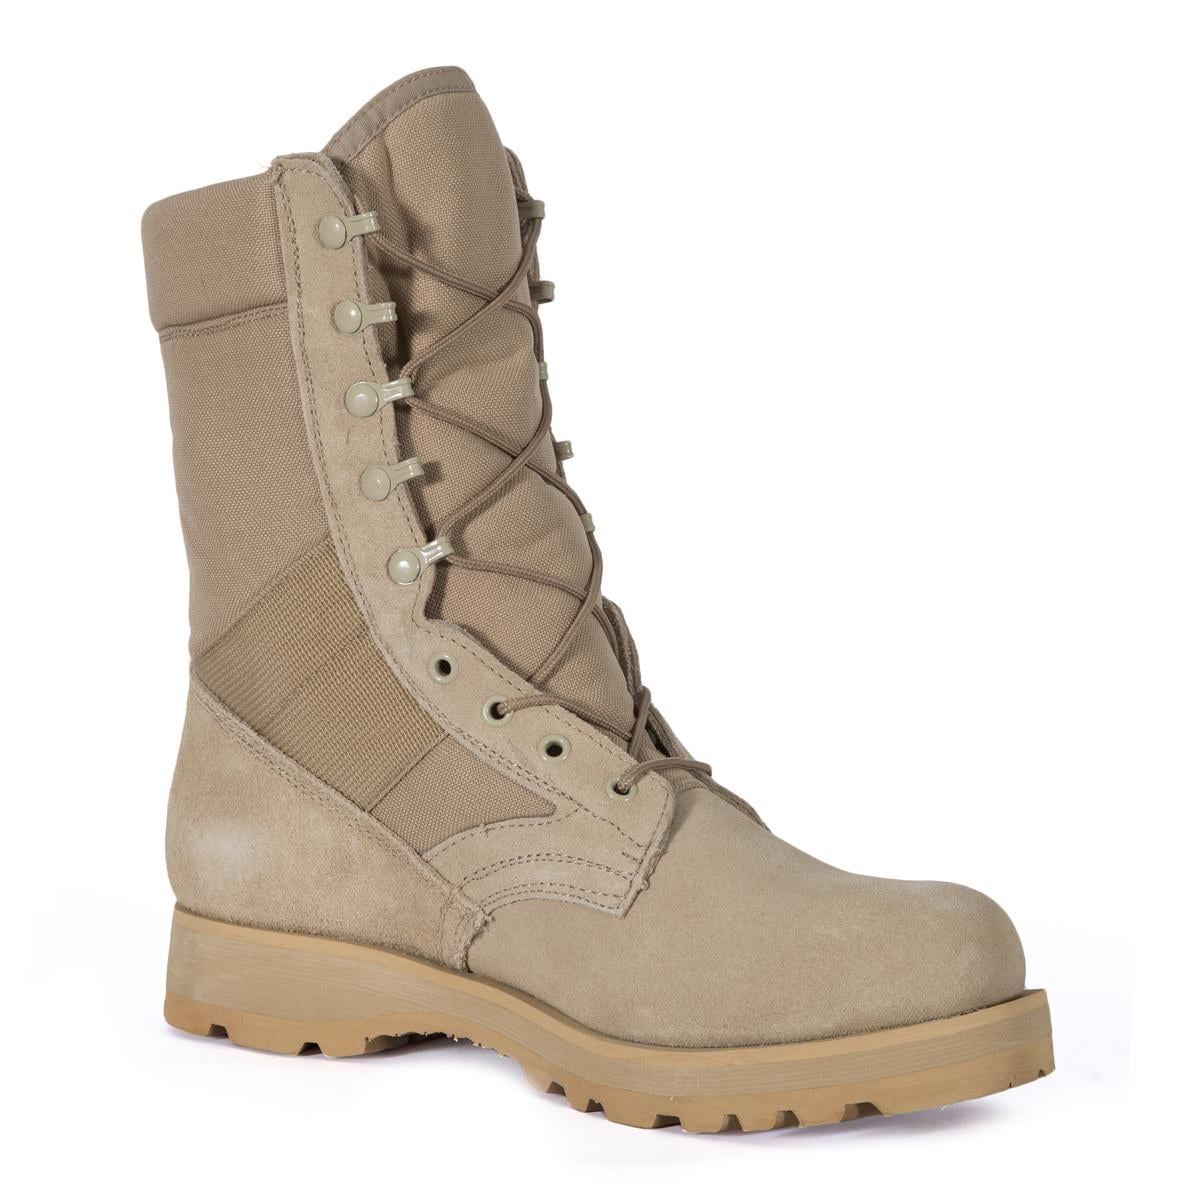 Rothco Desert Tan Classic Military Jungle Boots 5909